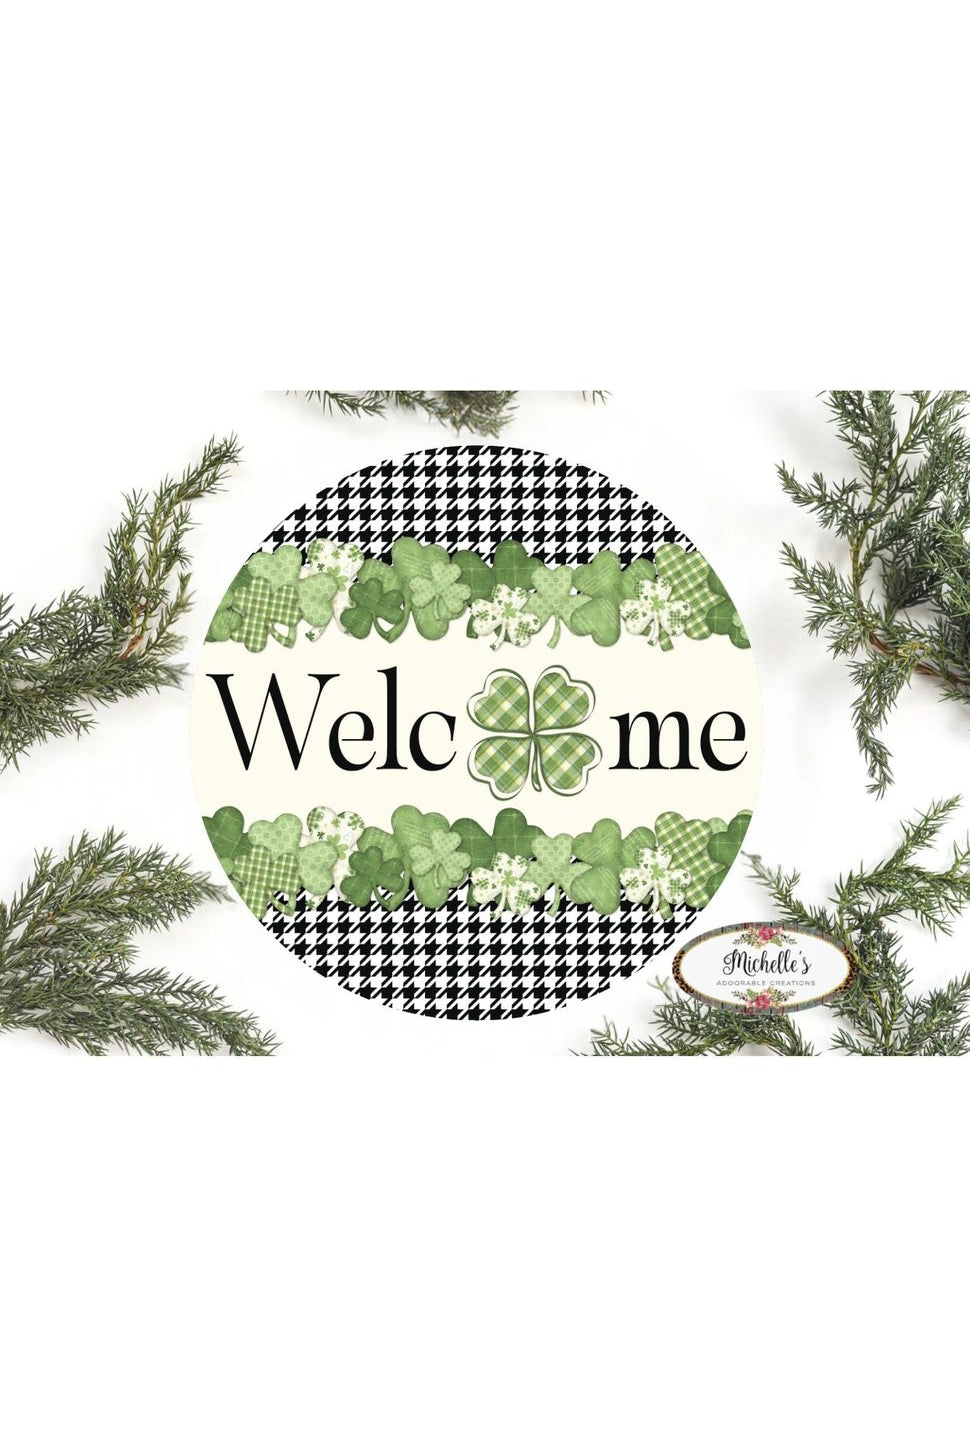 Shop For Saint Patrick Shamrock Welcome Sign - Wreath Enhancement